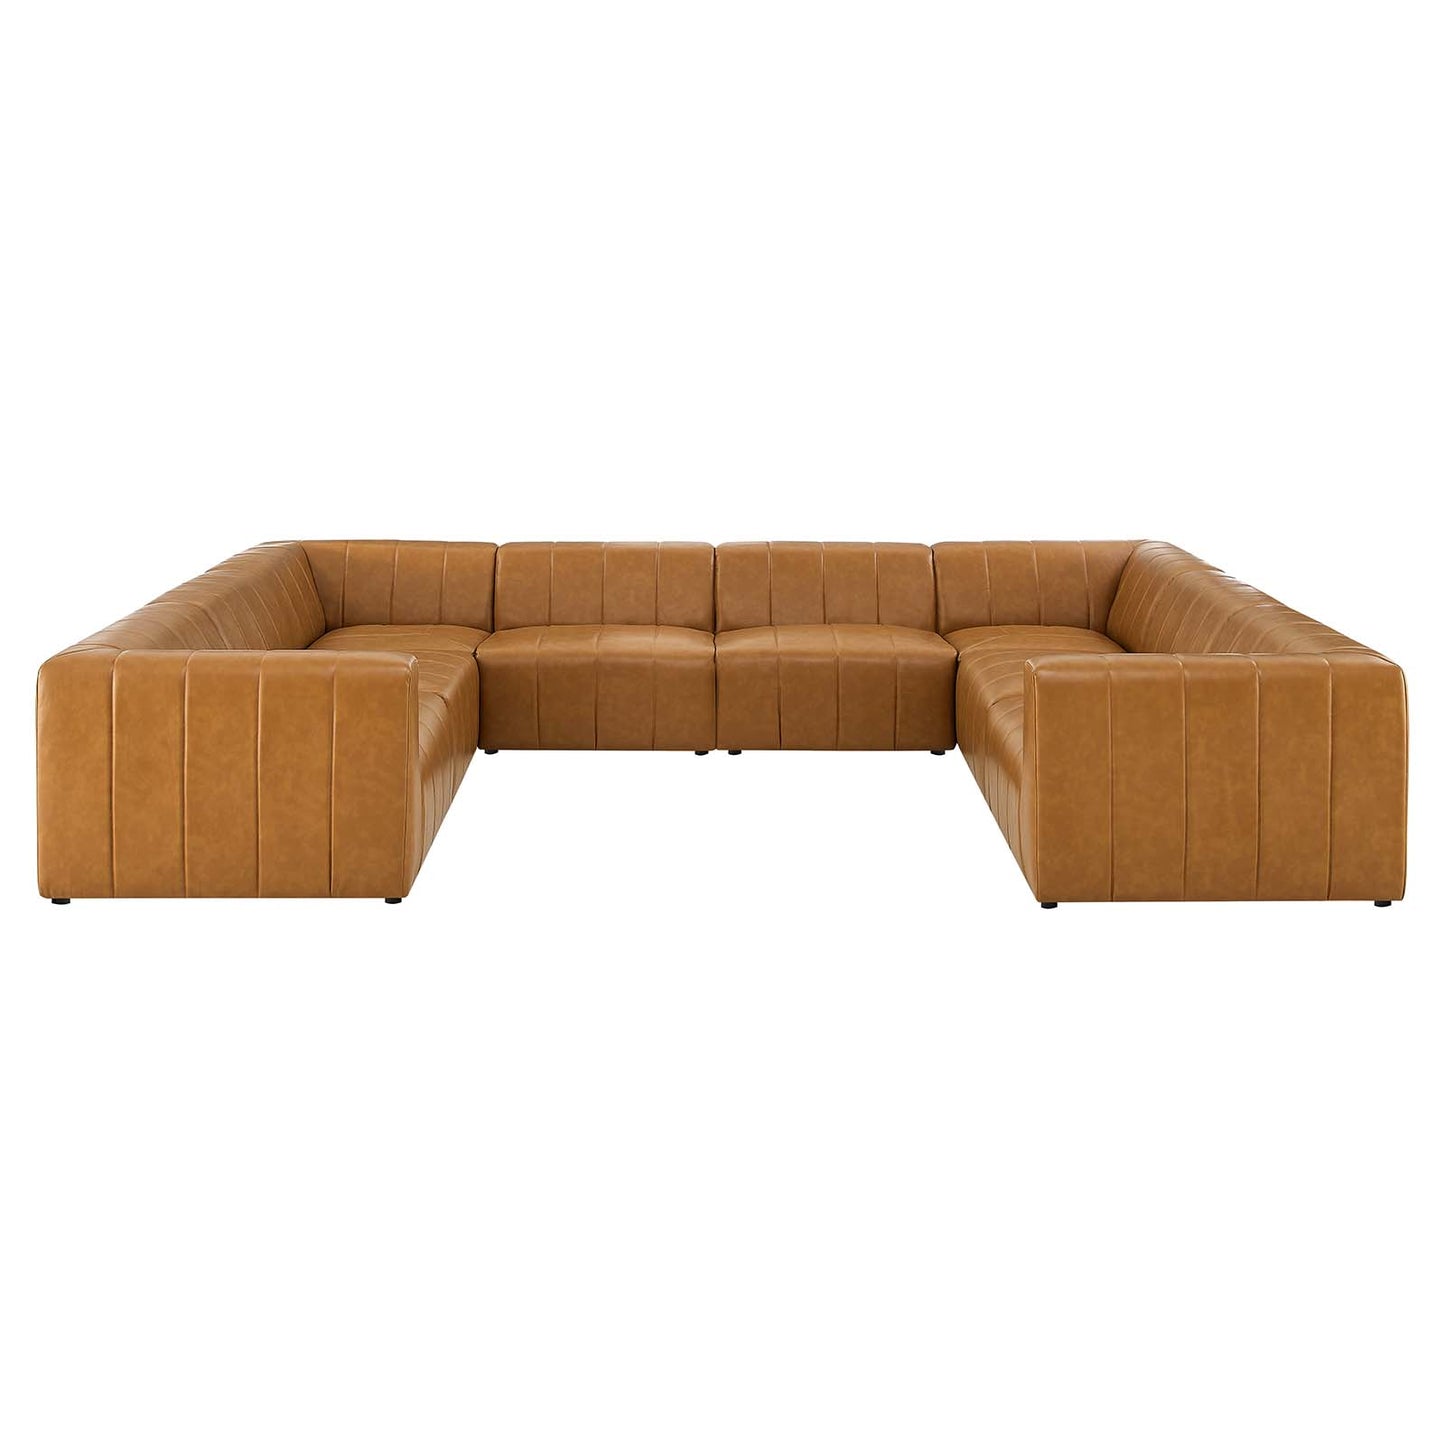 Bartlett Vegan Leather 8-Piece Sectional Sofa Tan EEI-4536-TAN